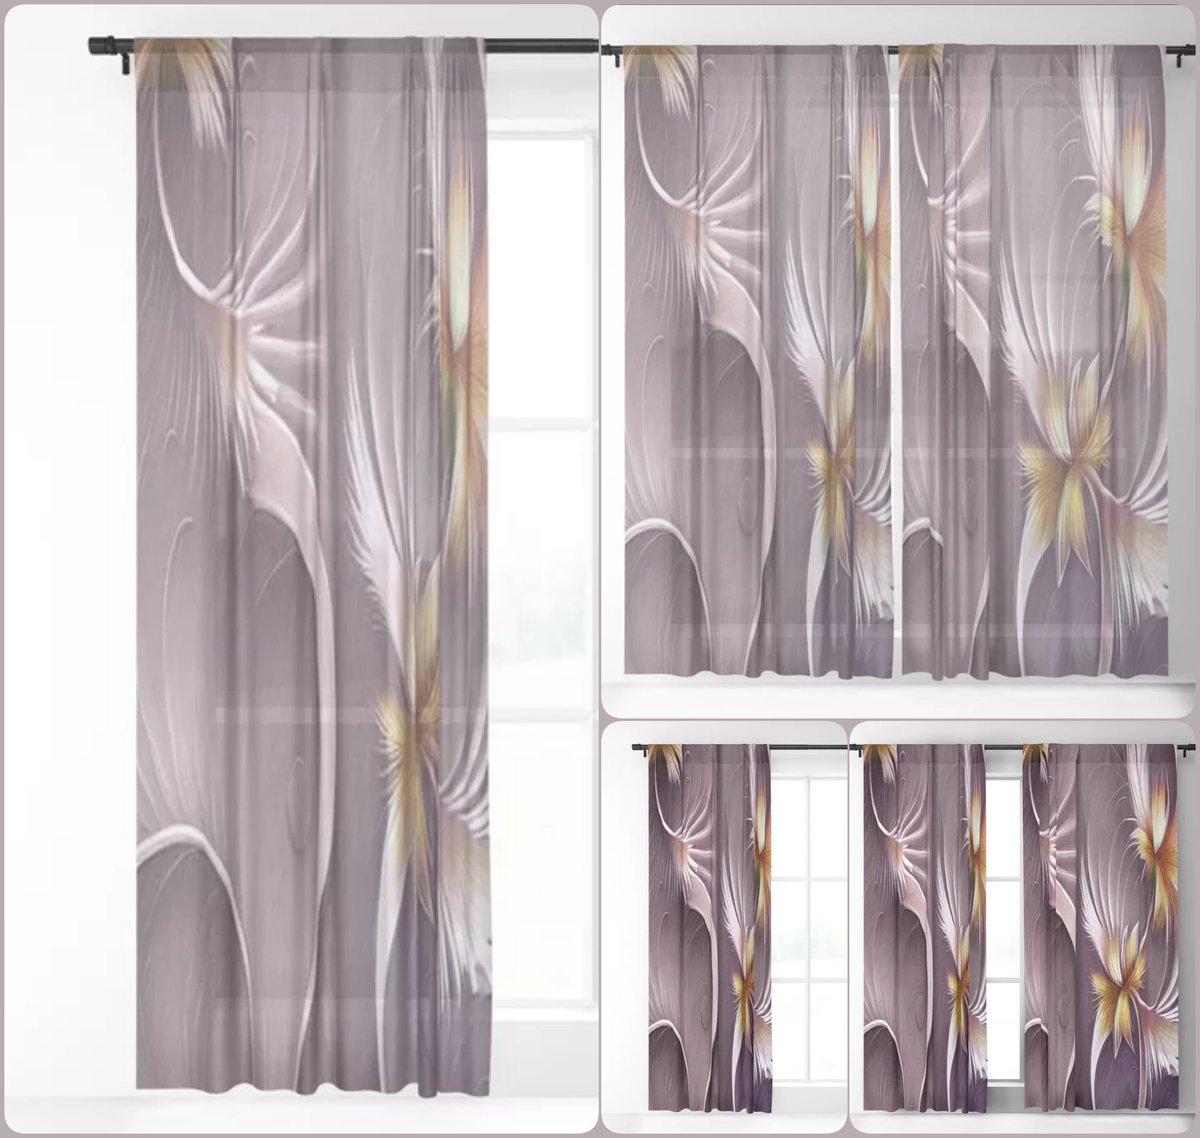 Regal Charm Sheer & Blackout Curtain~by Art Falaxy~
~Exquisite Decor~
#artfalaxy #art #curtains #drapes #homedecor #society6 #Society6max #swirls #accents #sheercurtains #windowtreatments #blackoutcurtains #floorrugs

society6.com/product/regal-…
society6.com/product/regal-…